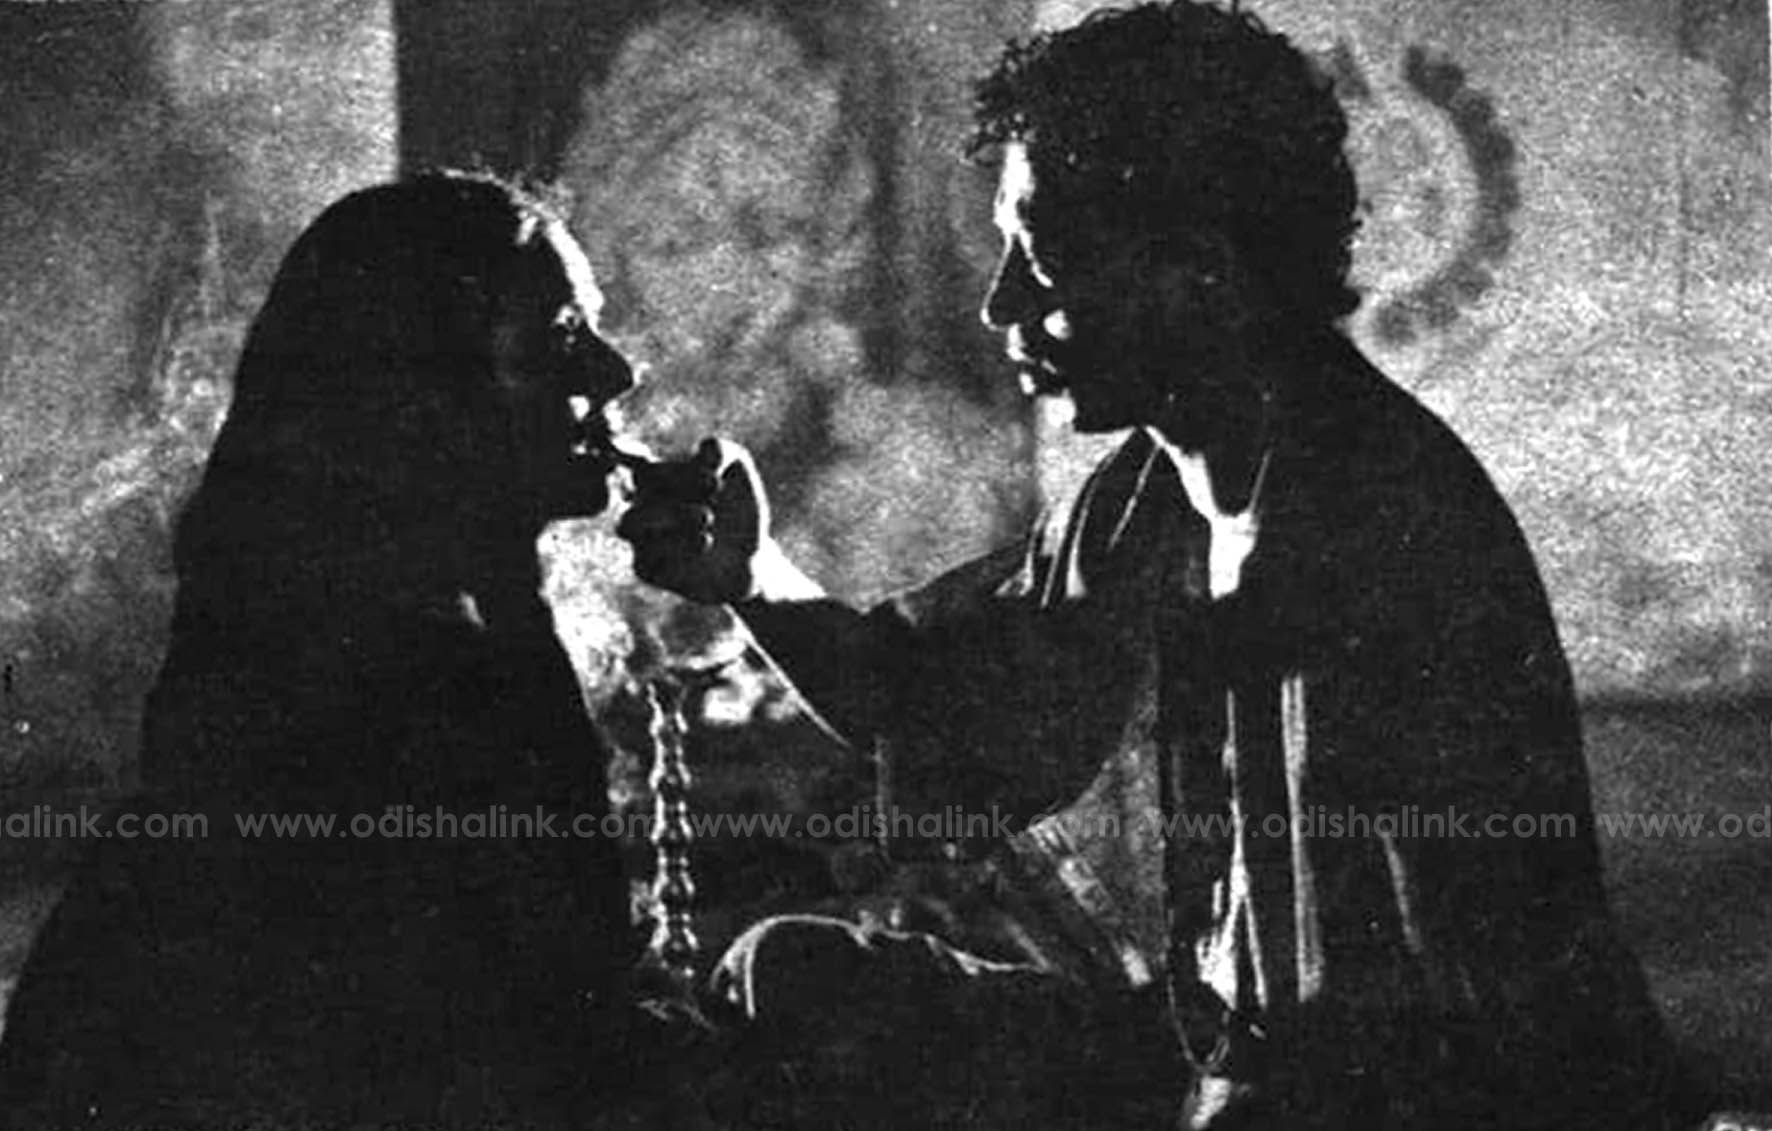 Bijaya Jena and Irrfan Khan in a still from the shooting set of Odia cinema Tara 1991